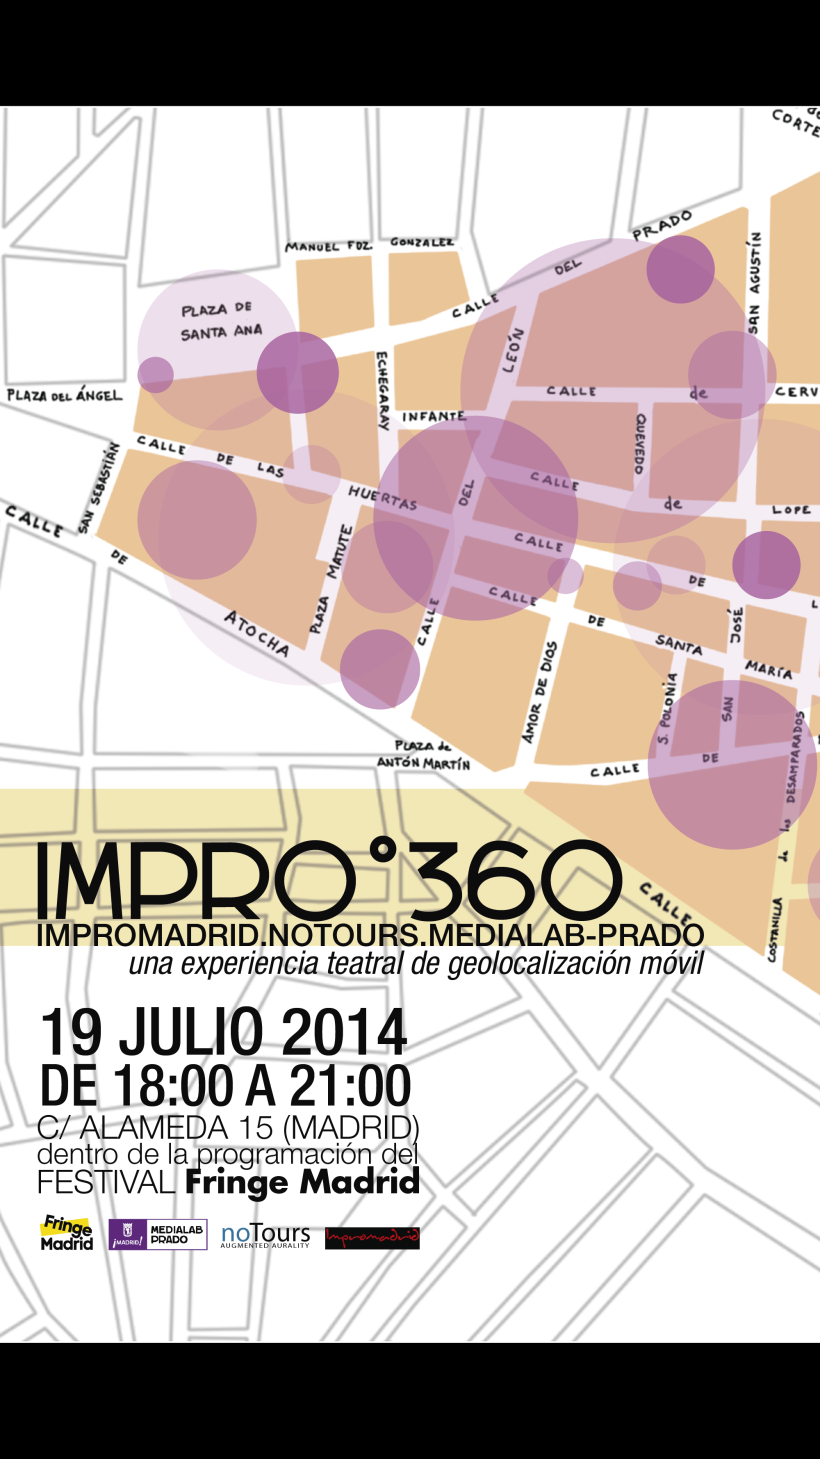 IMPRO 360_medialabprado 1